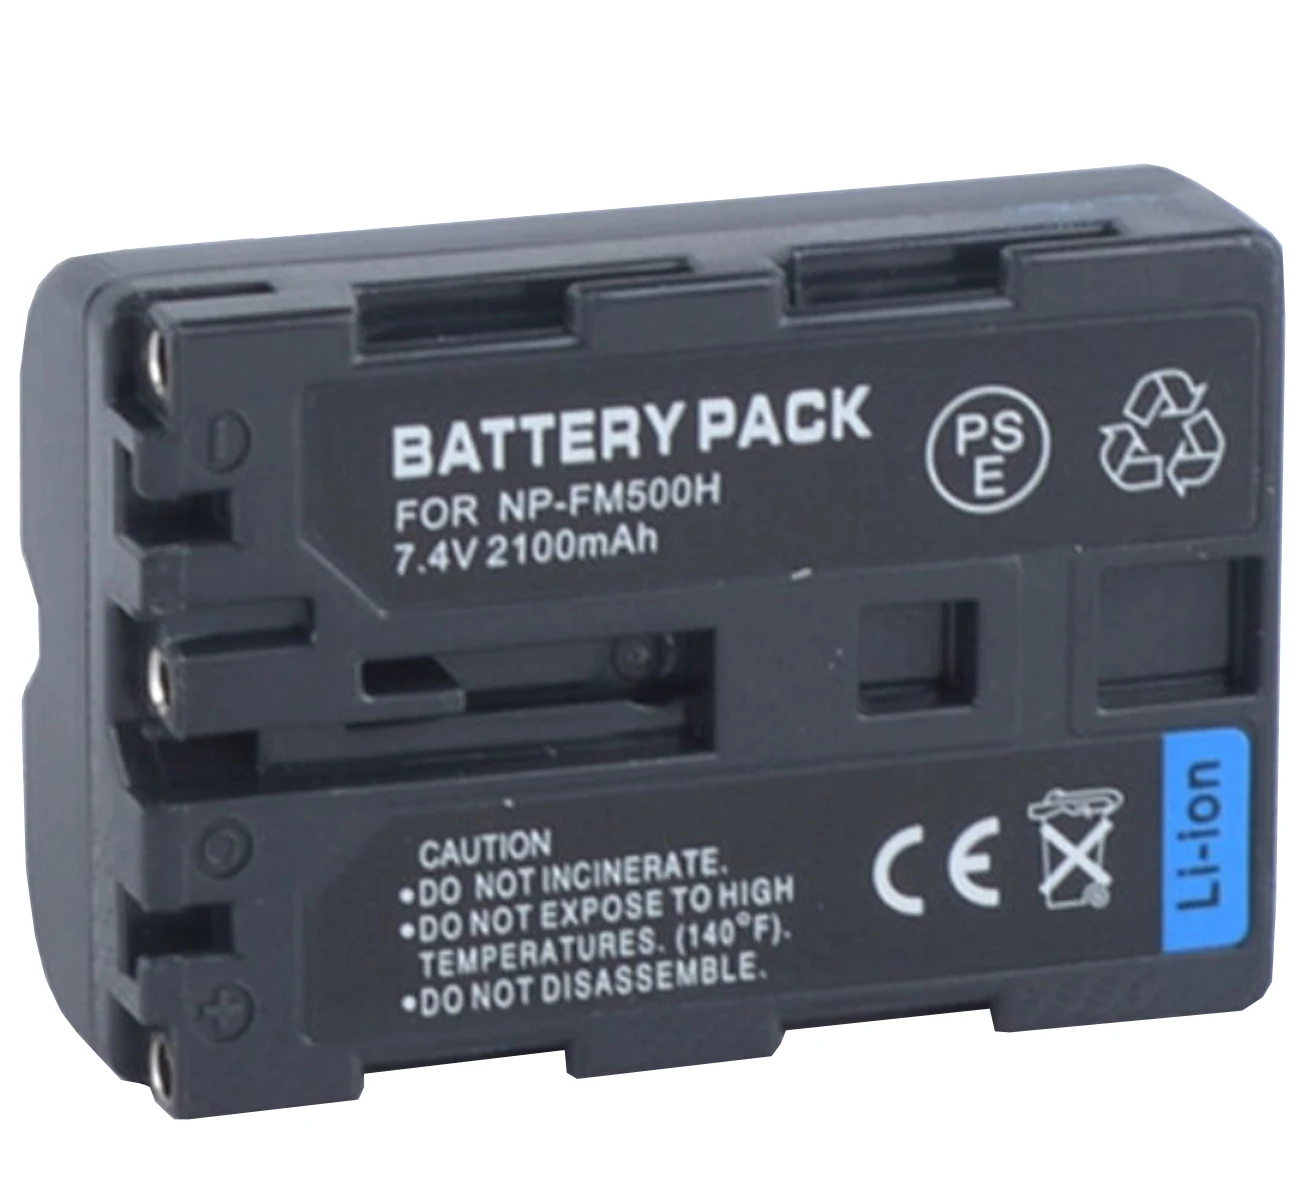 

Battery Pack for Sony Alpha SLT-A57K, SLT-A57M, SLT-A58, SLT-A58K, SLT-A58M, SLT-A58Y Digital SLR Camera